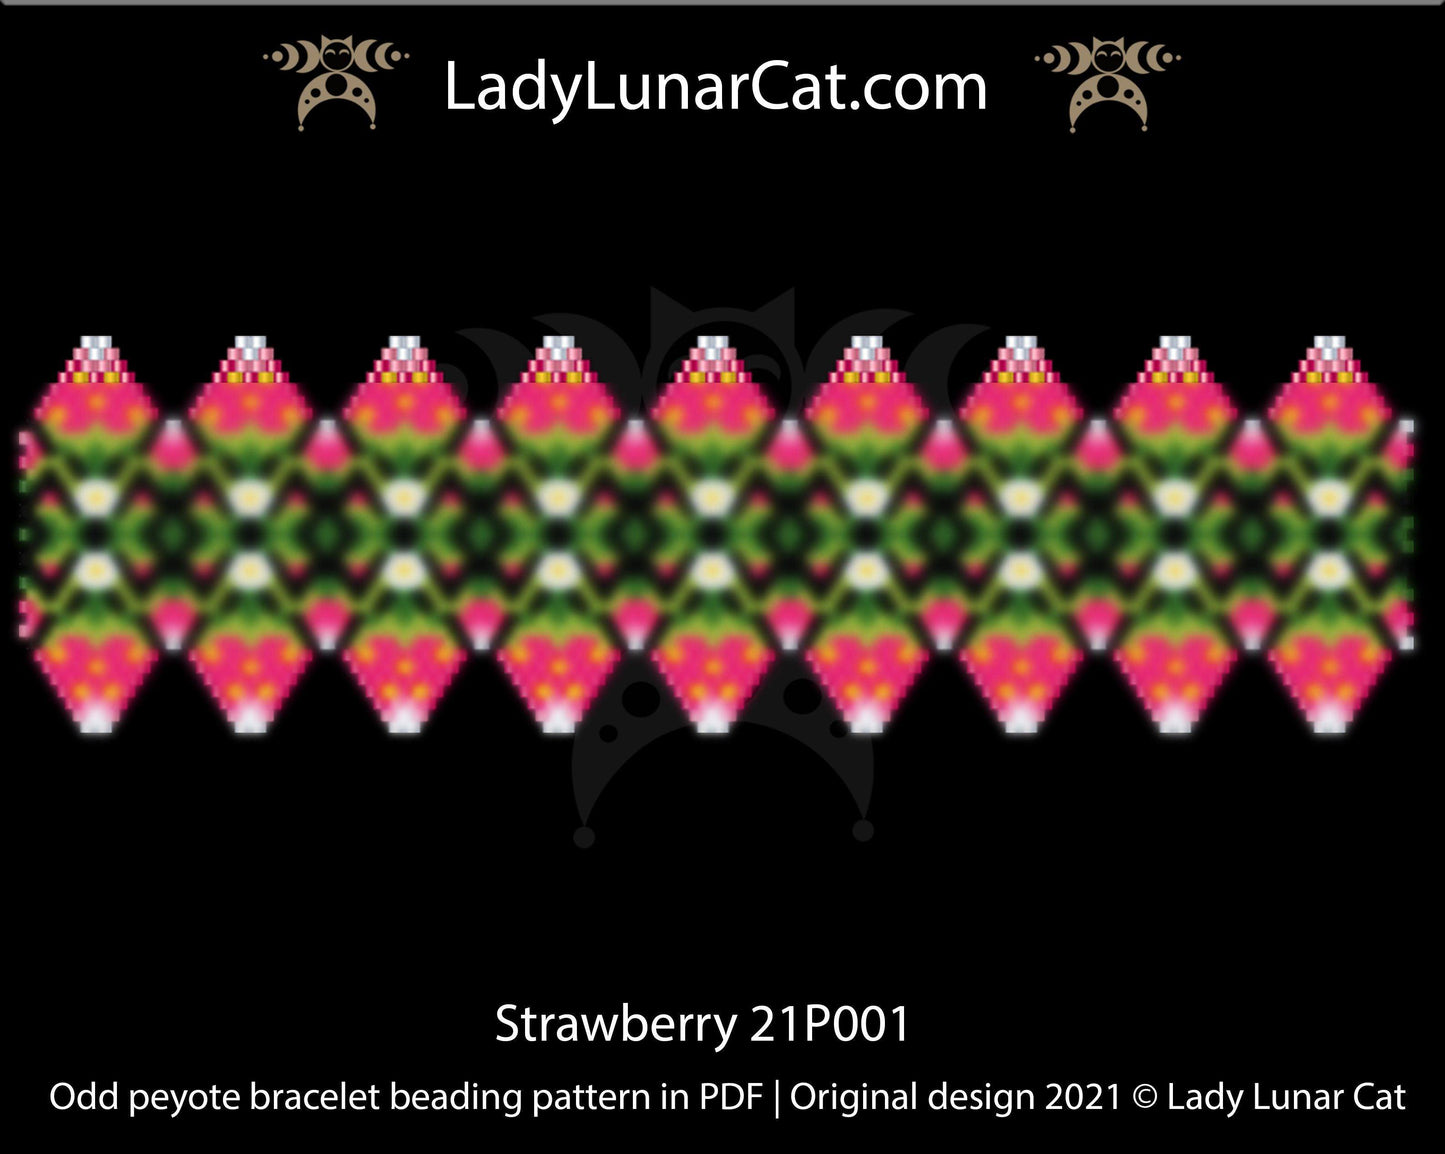 Copy of Odd count peyote bracelet pattern for beading Strawberries 18P021 LadyLunarCat